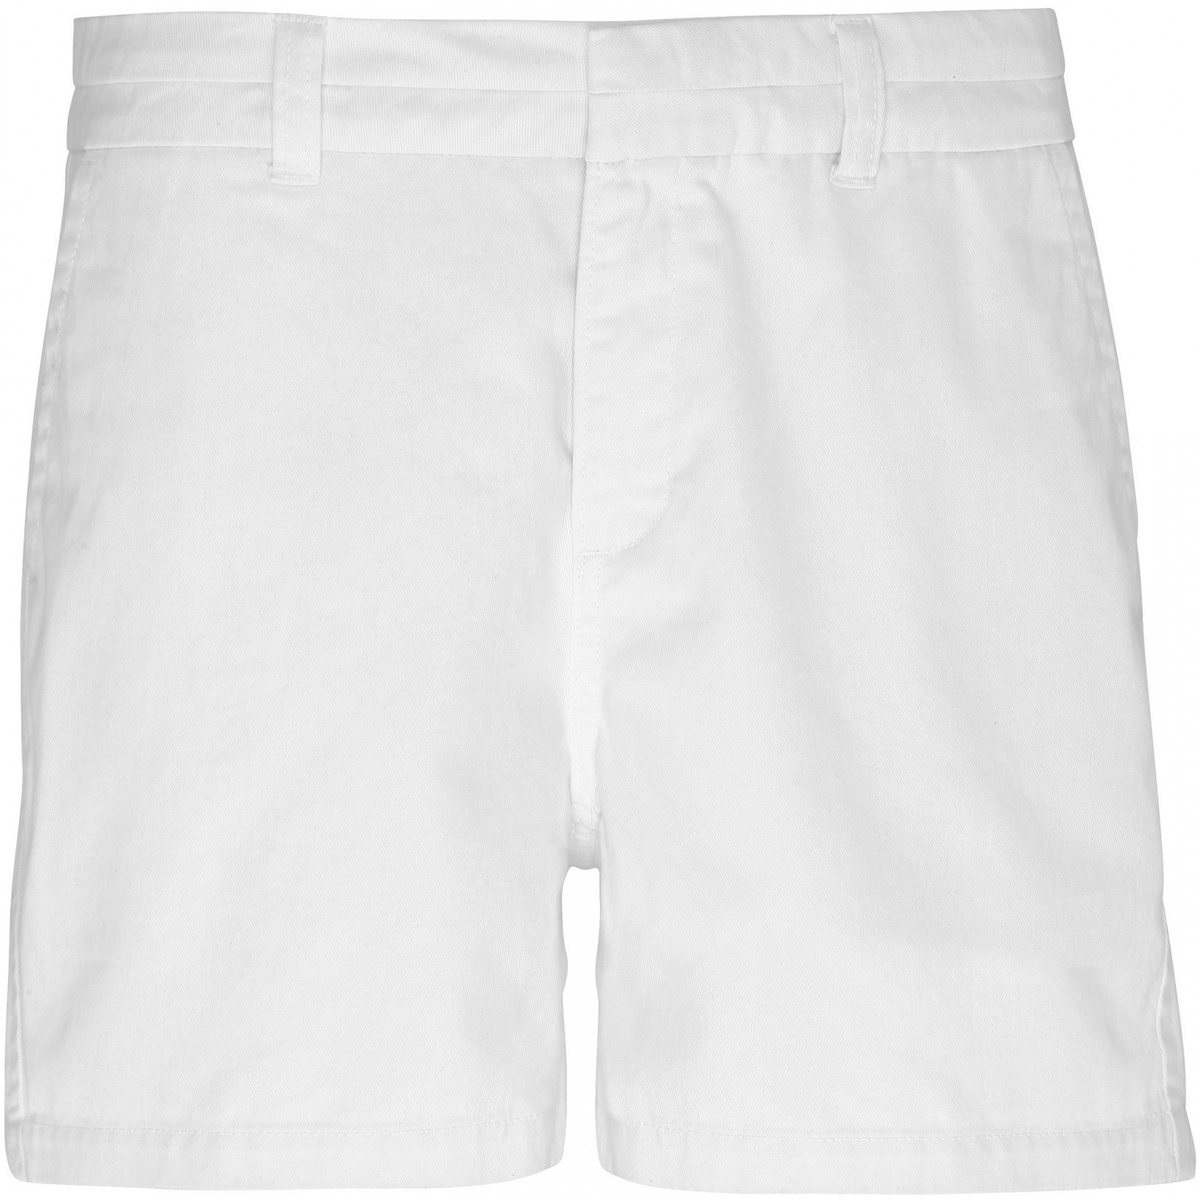 VêRAW Femme Khaki Shorts / Bermudas Asquith & Fox AQ061 Blanc